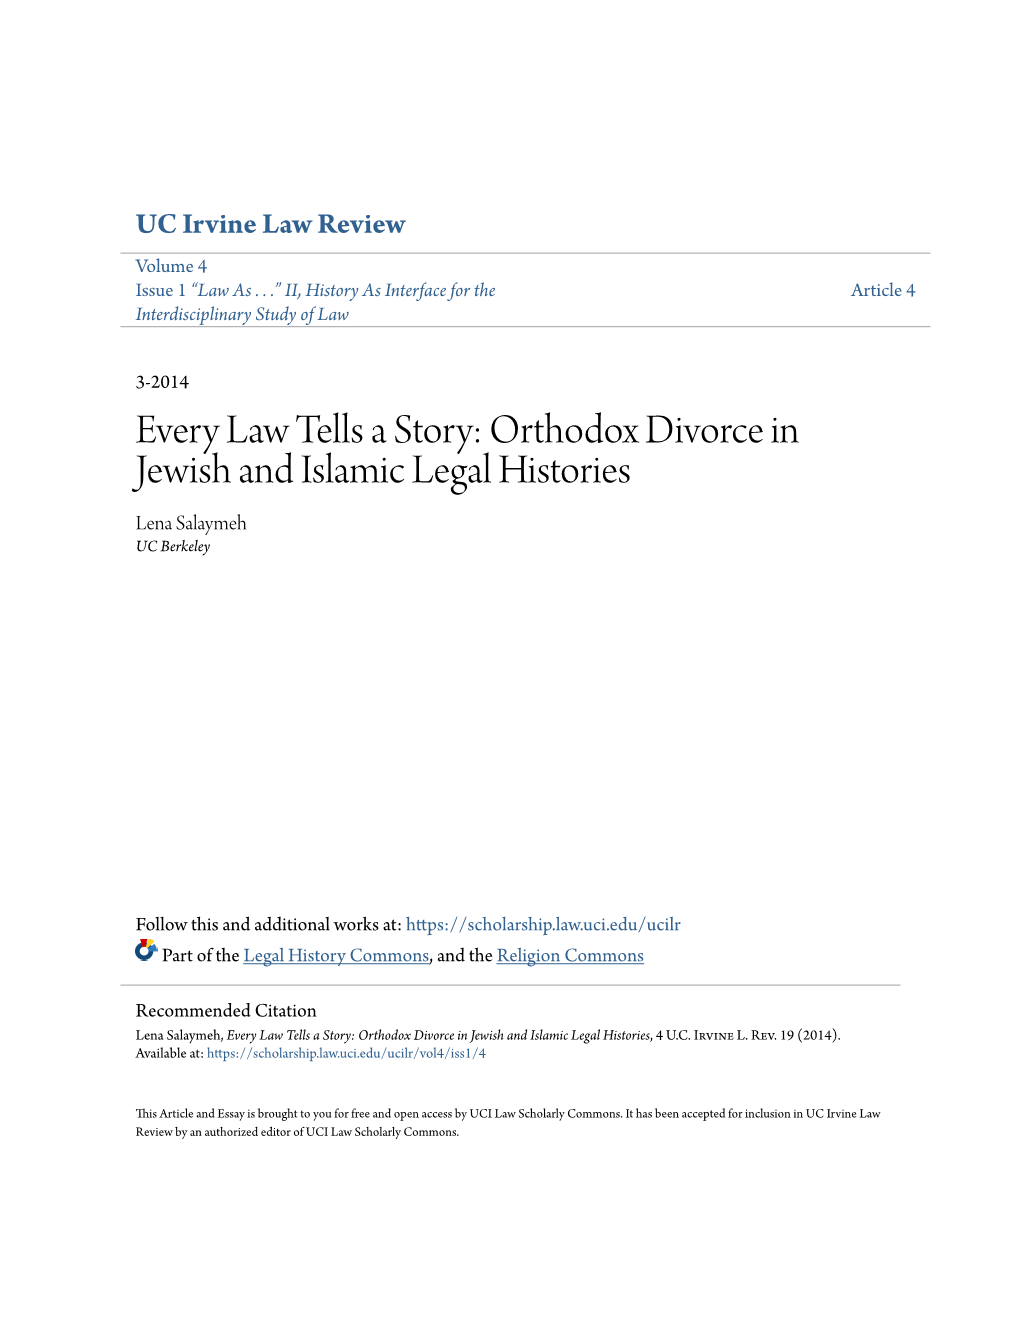 Orthodox Divorce in Jewish and Islamic Legal Histories Lena Salaymeh UC Berkeley